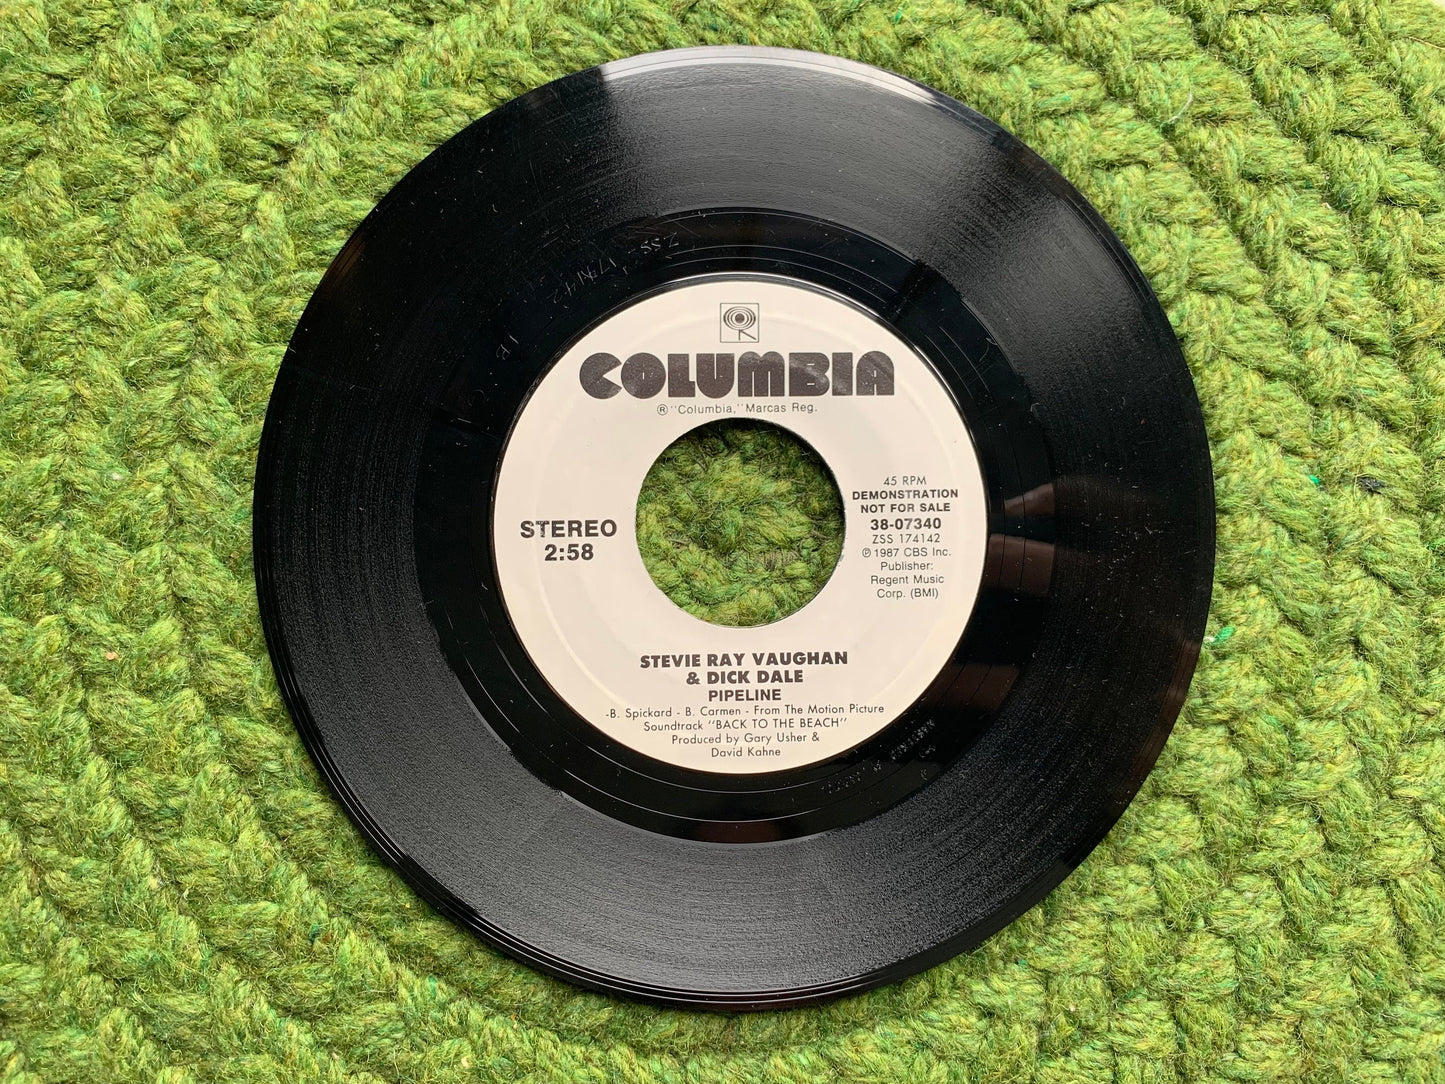 Stevie Ray Vaughan & Dick Dale Pipeline Single 45 Rpm 7" Records PROMO Vintage Vinyl Record